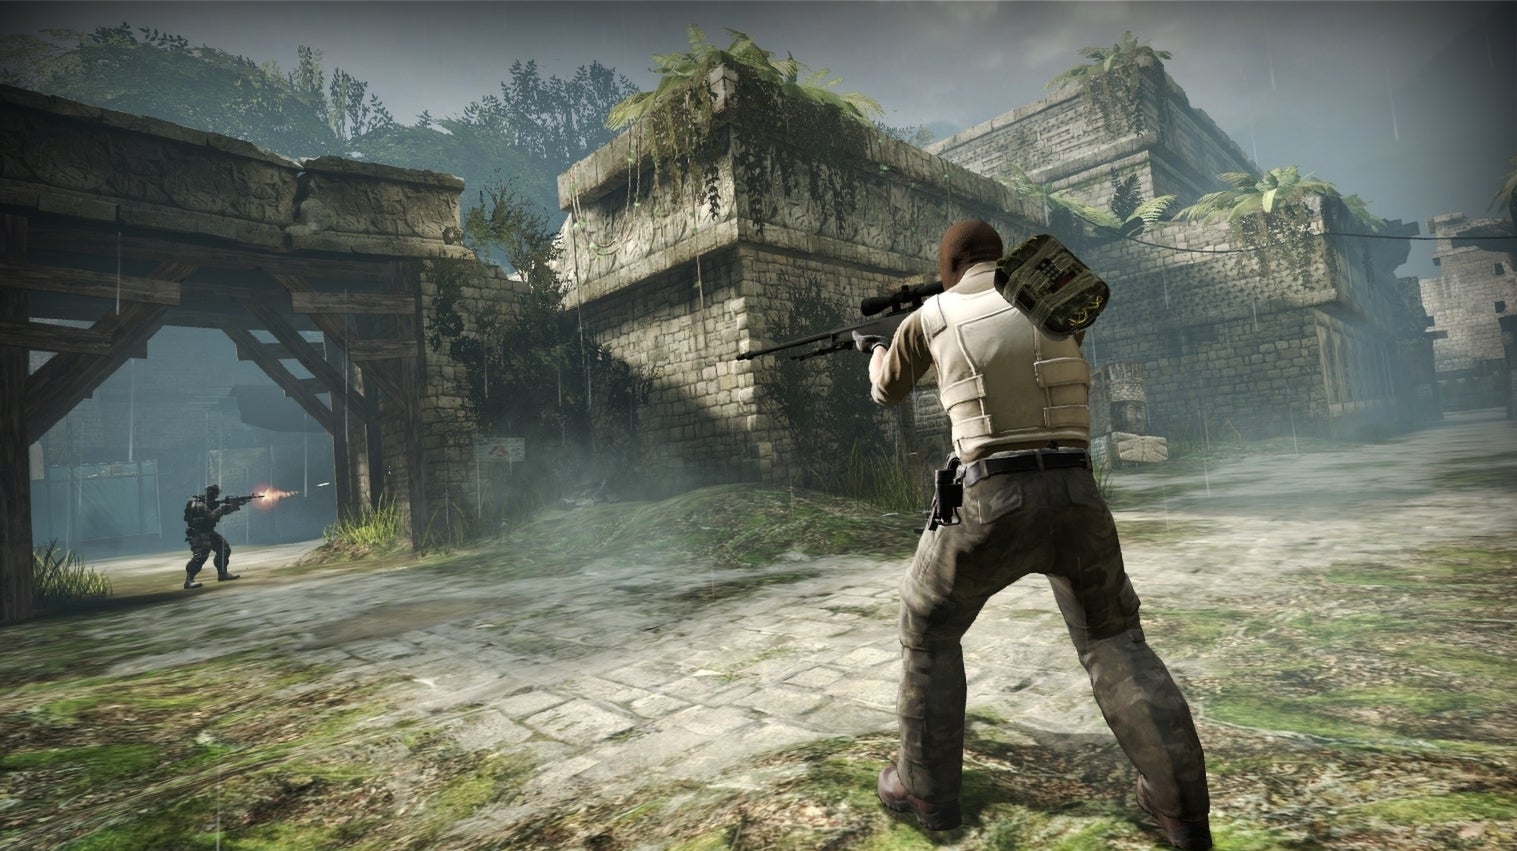 Immagine di Counter-Strike: Global Offensive introduce la nuova soluzione anti-cheat Trusted Mode